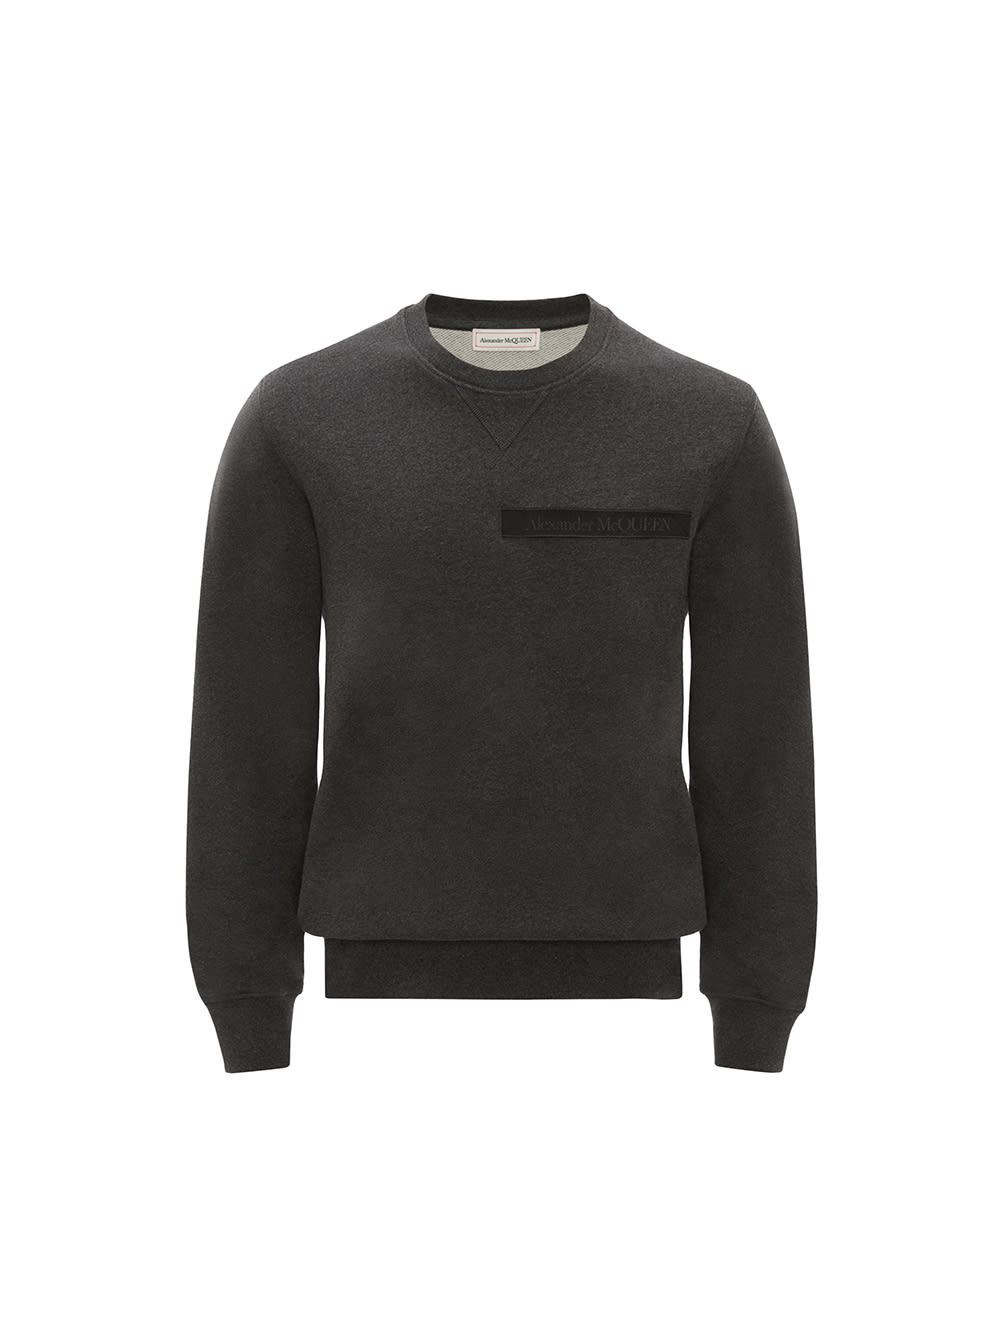 Alexander McQueen Man Sweatshirt With Selvedge Logo Band In Charcoal